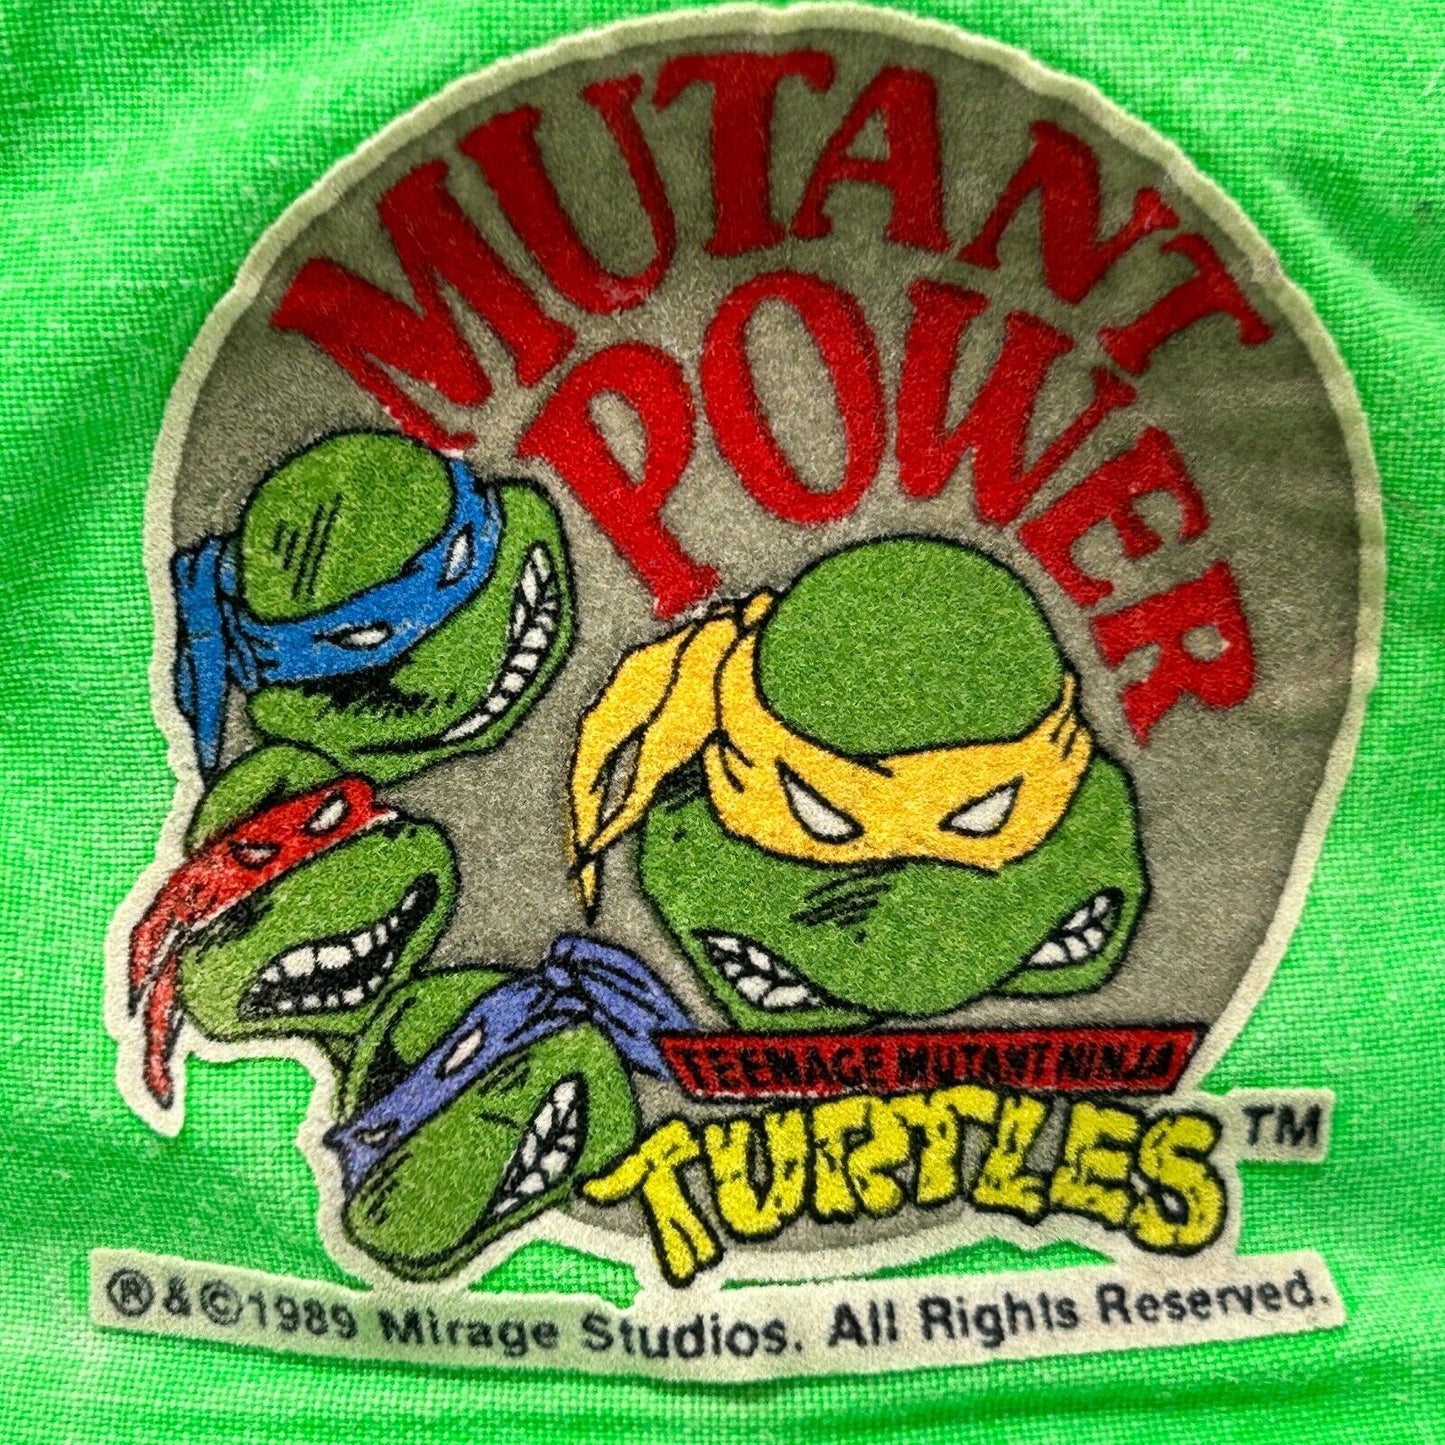 TMNT Mutant Power Vintage 80s Militar Cadete Sombrero Verde Kepi Ejército Gorra de Béisbol